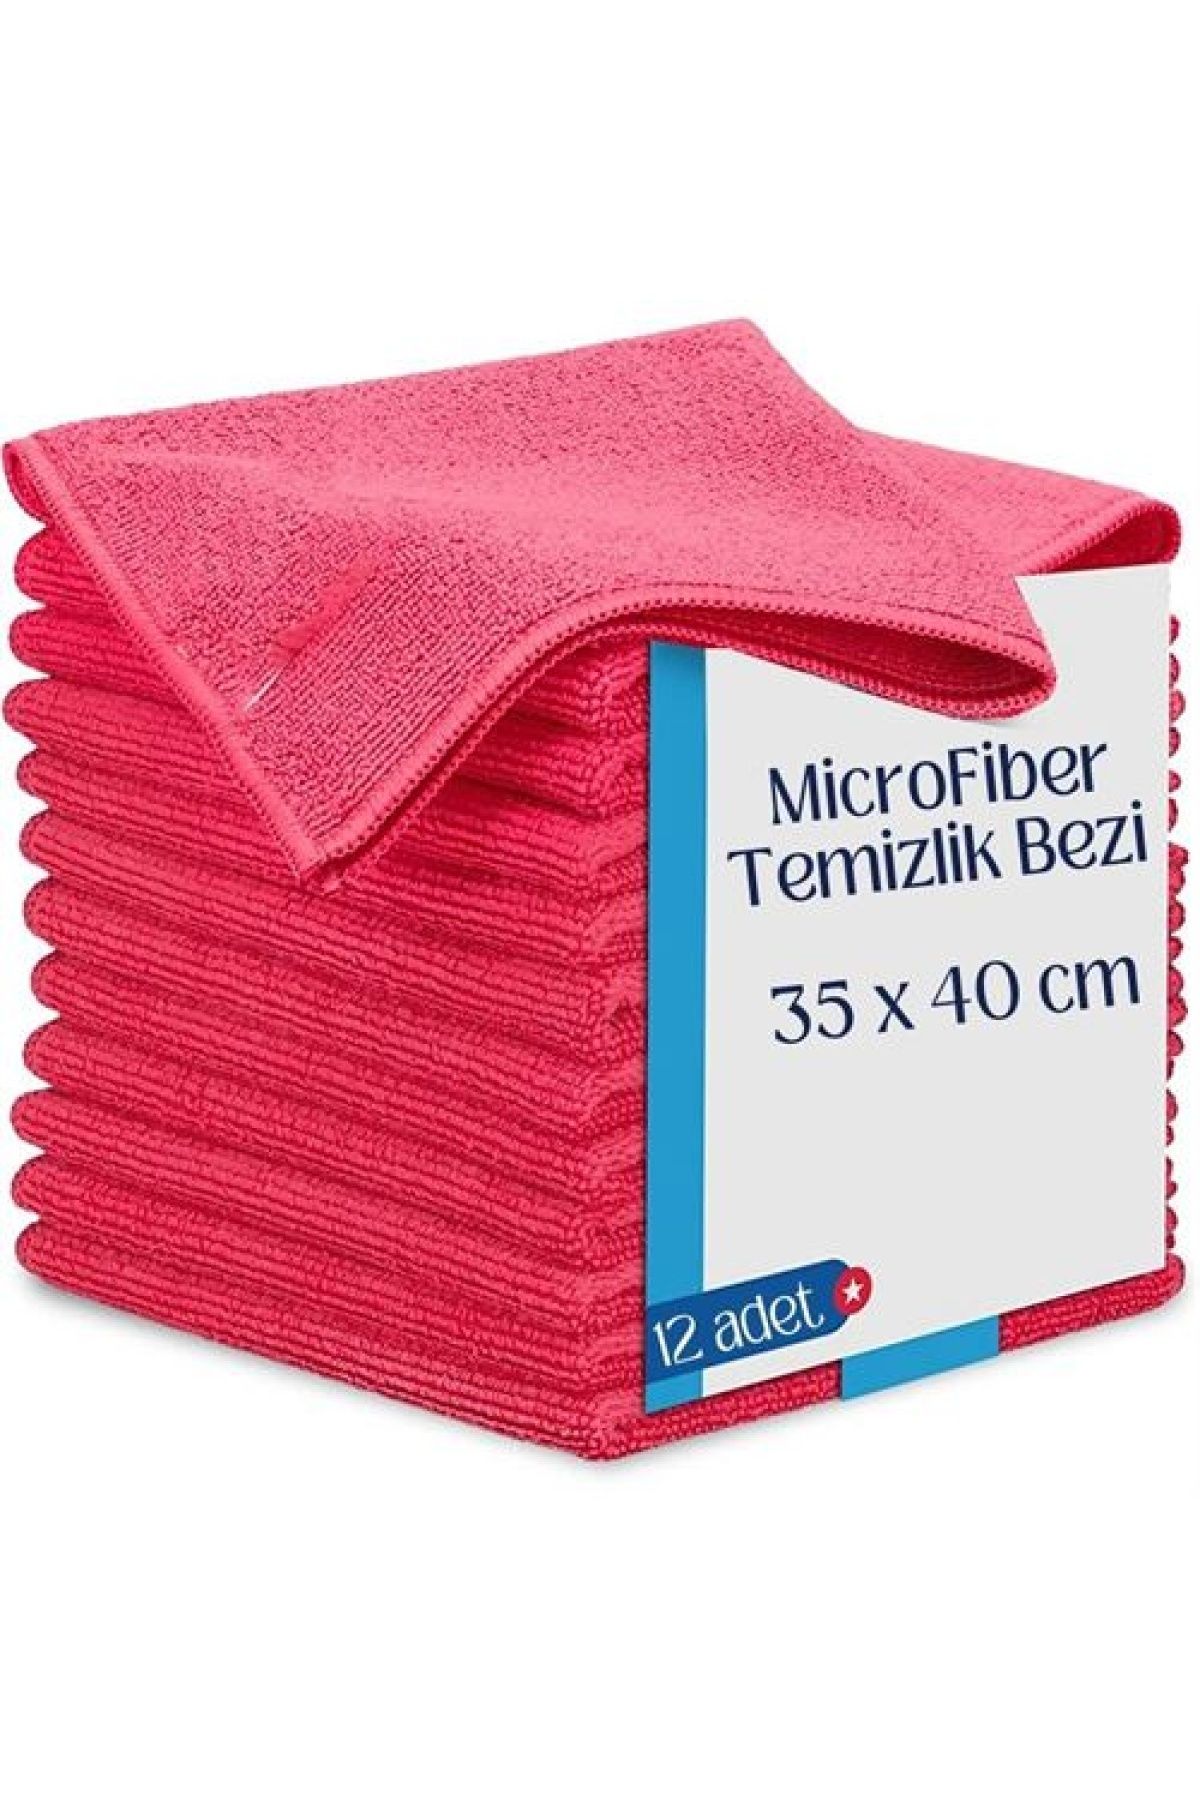 Transformacion Findit Microfiber Temizlik Bezi 12 Adet Towel Design 718546 (FİNDİT)